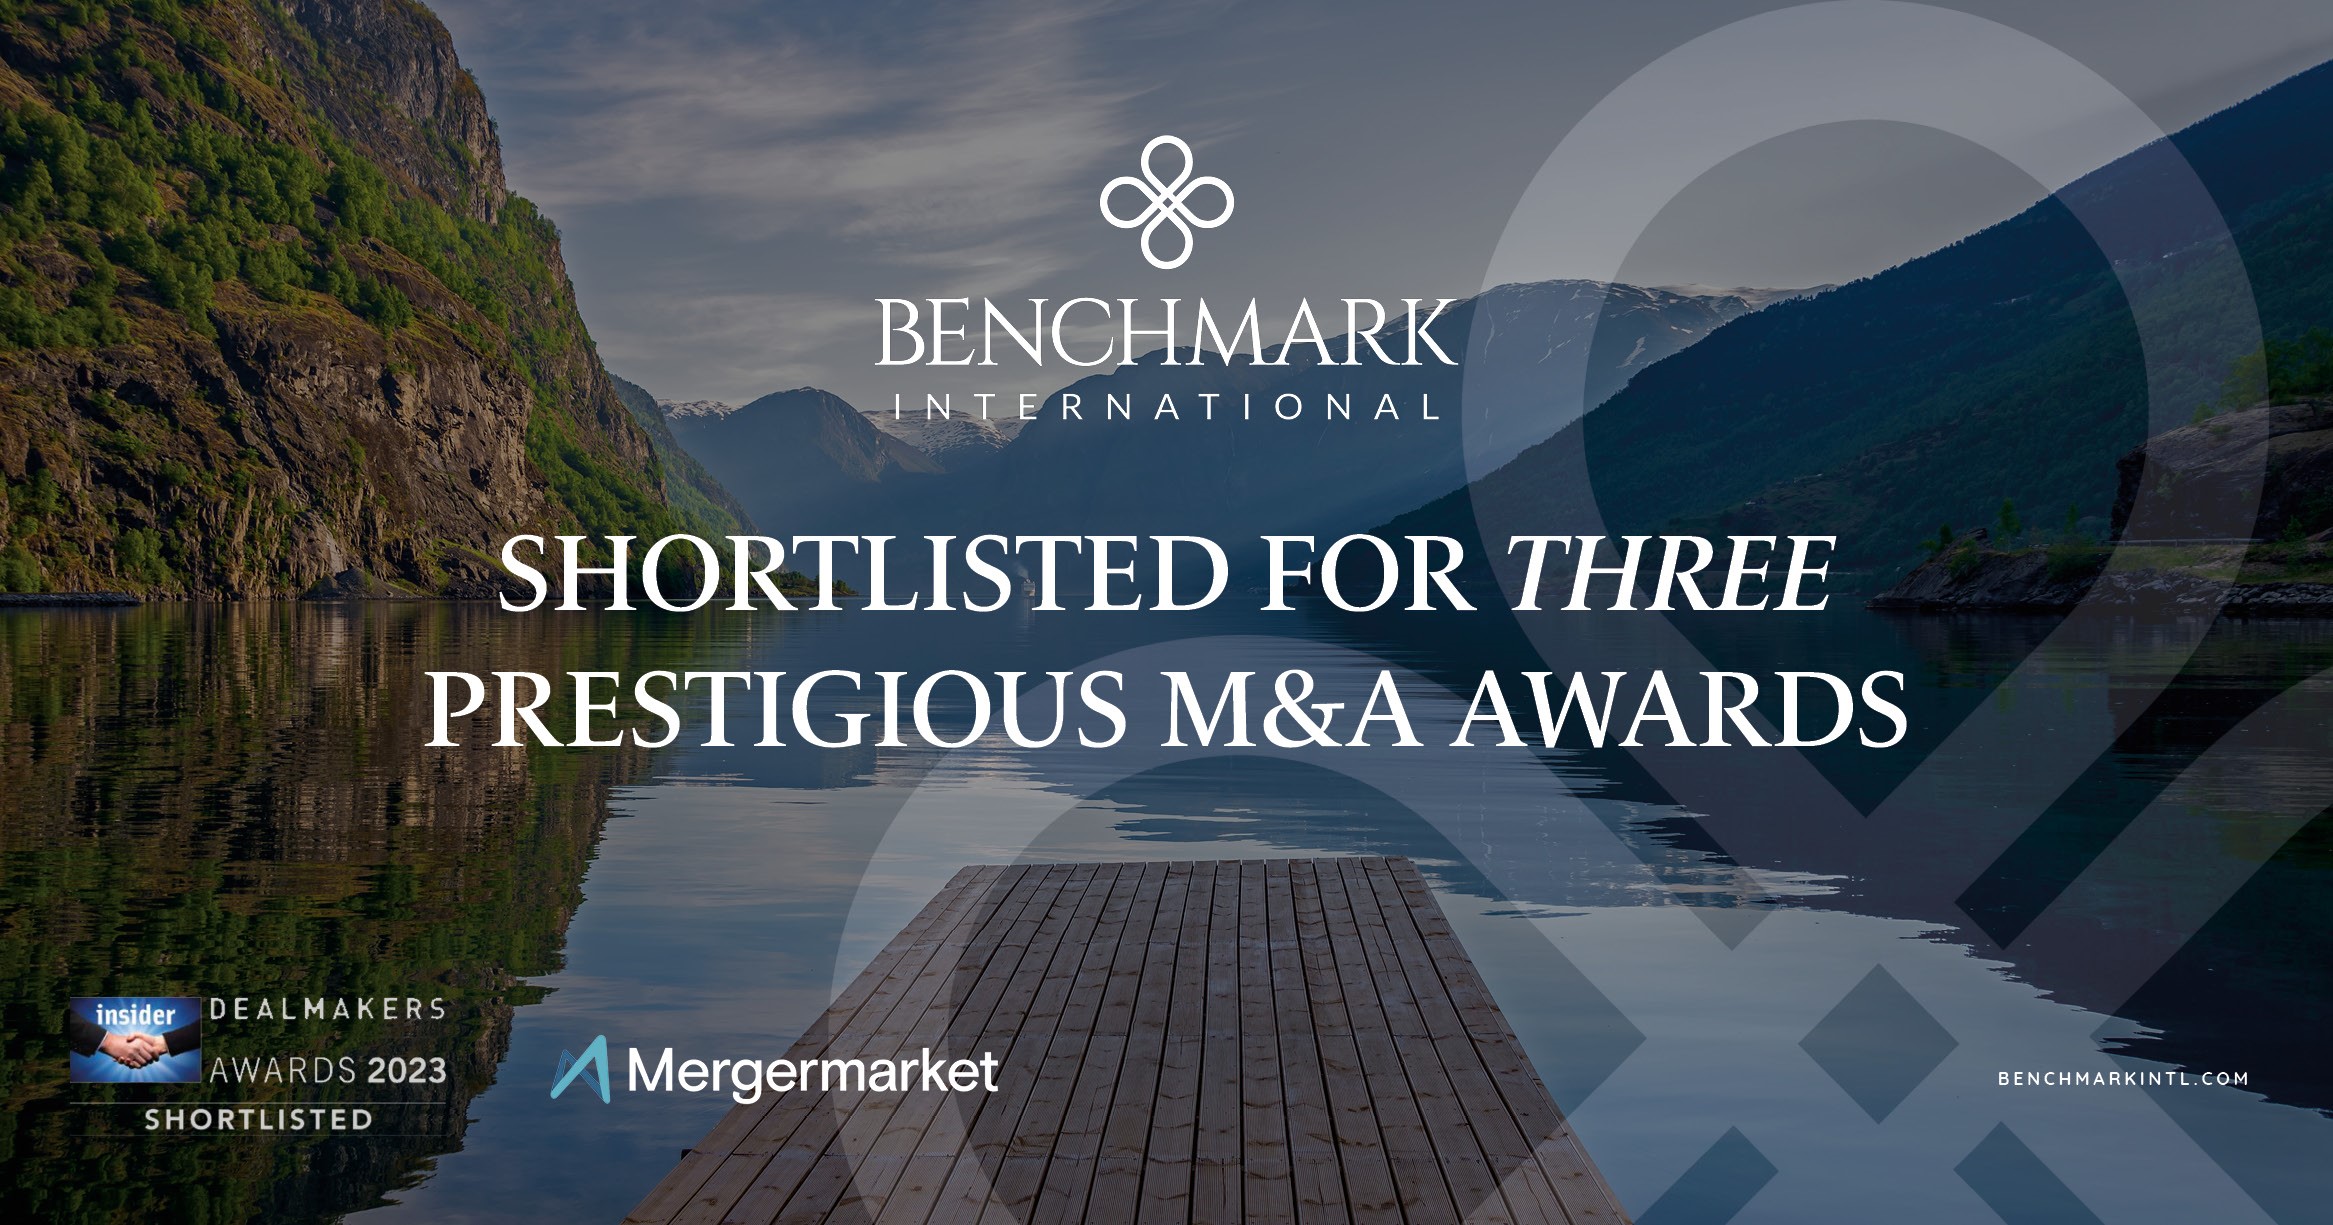 Benchmark International Shortlisted for Three Prestigious M&A Awards